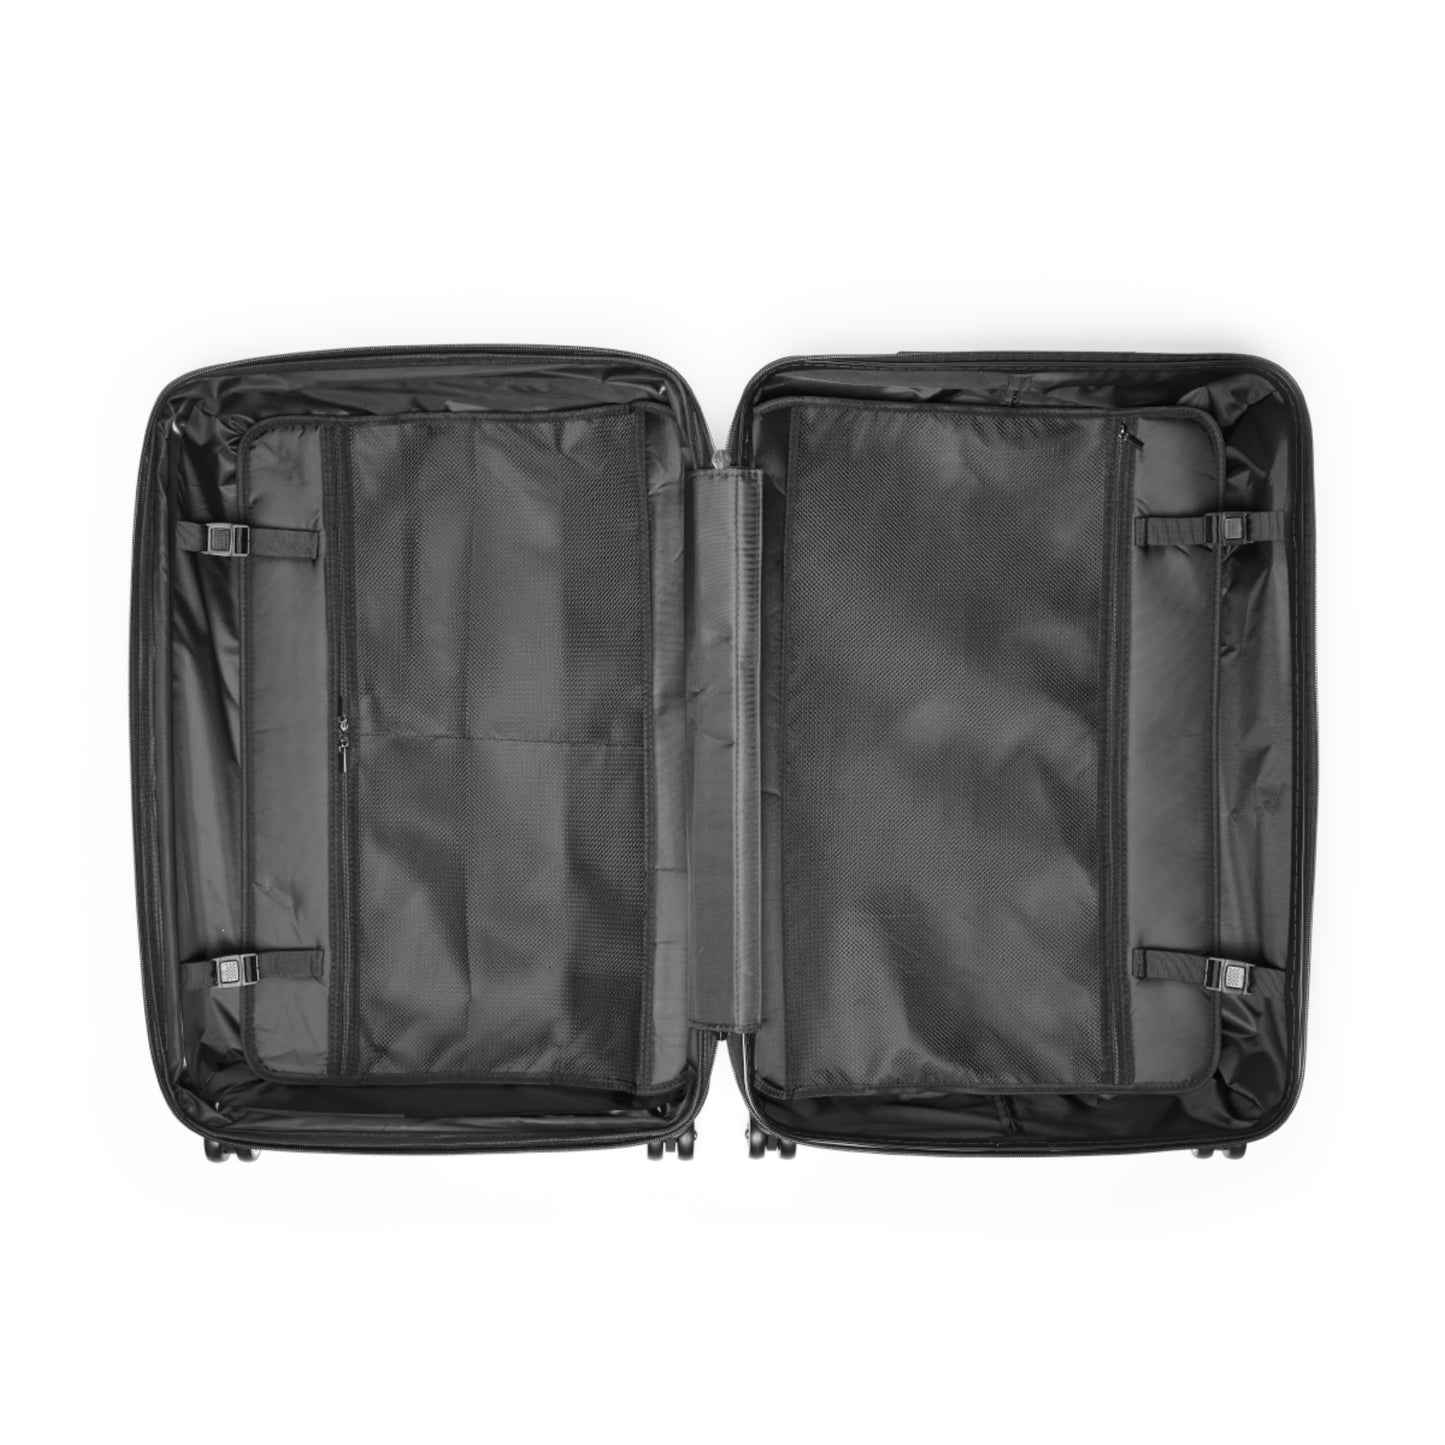 Cabin Suitcase - KLC (Black)